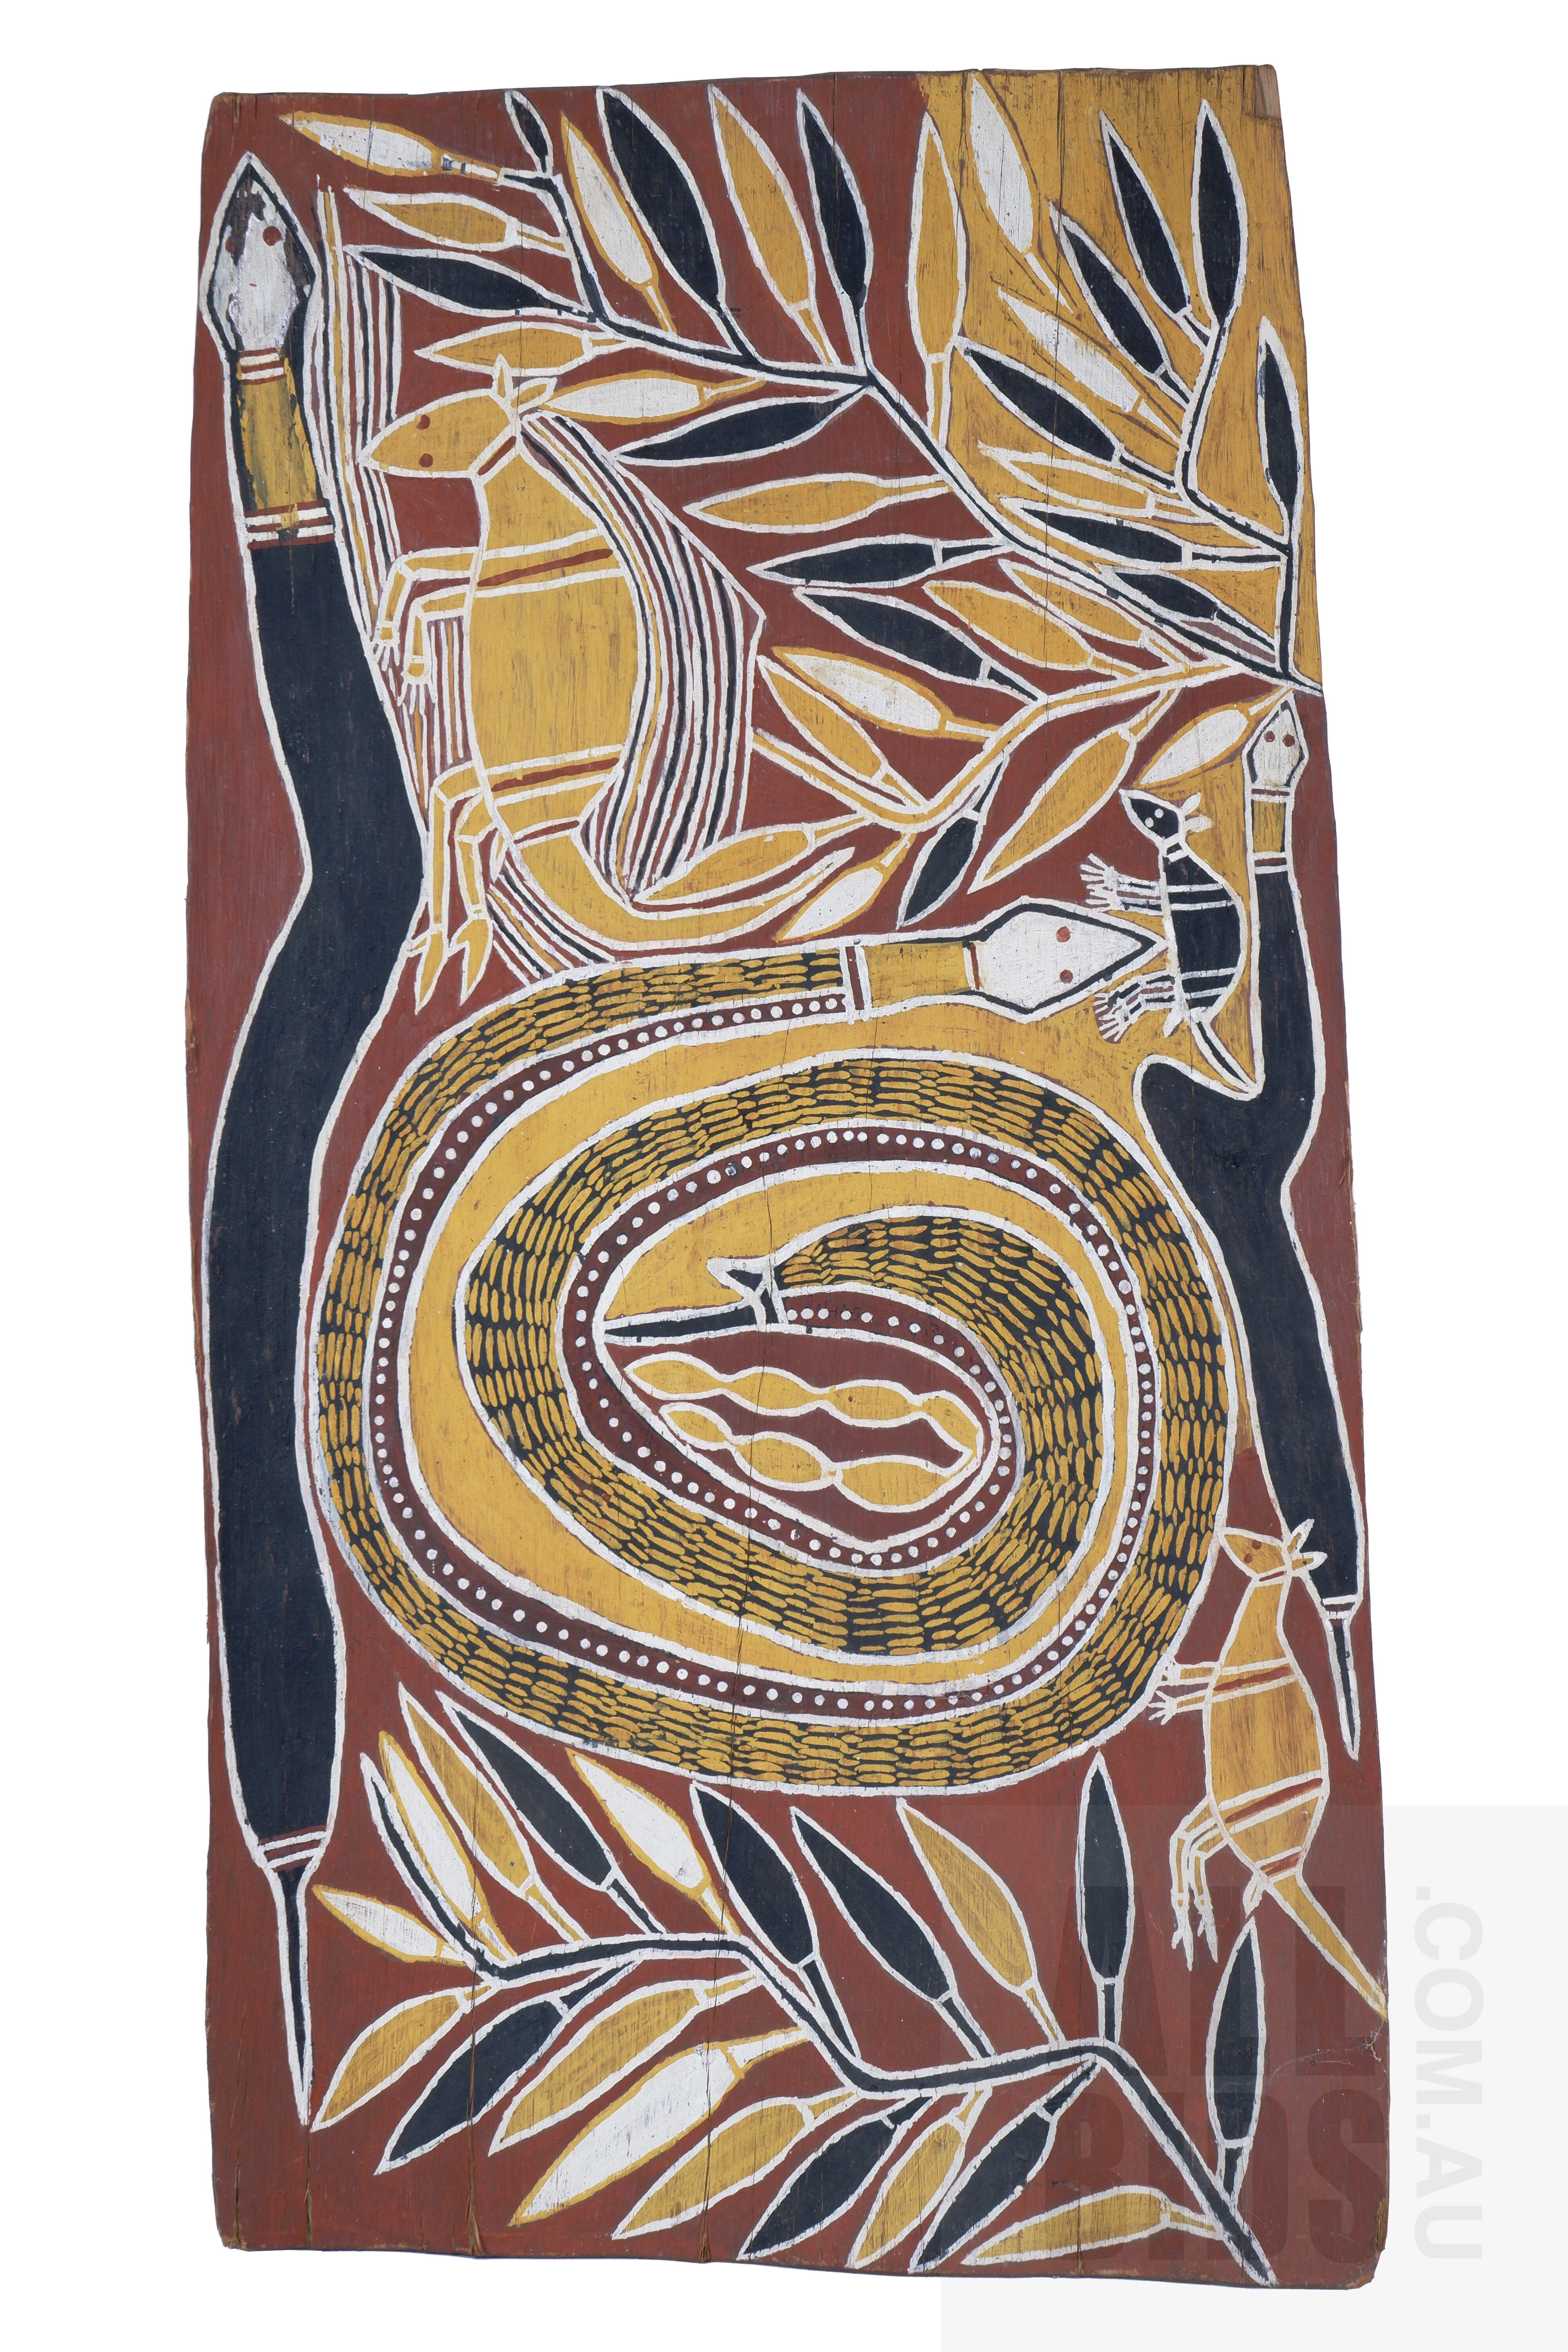 'Attributed to Bunumbirr Bininyuwuy (1928-1982), Natural Earth Pigments on Eucalyptus Bark, 106 x 55 cm'